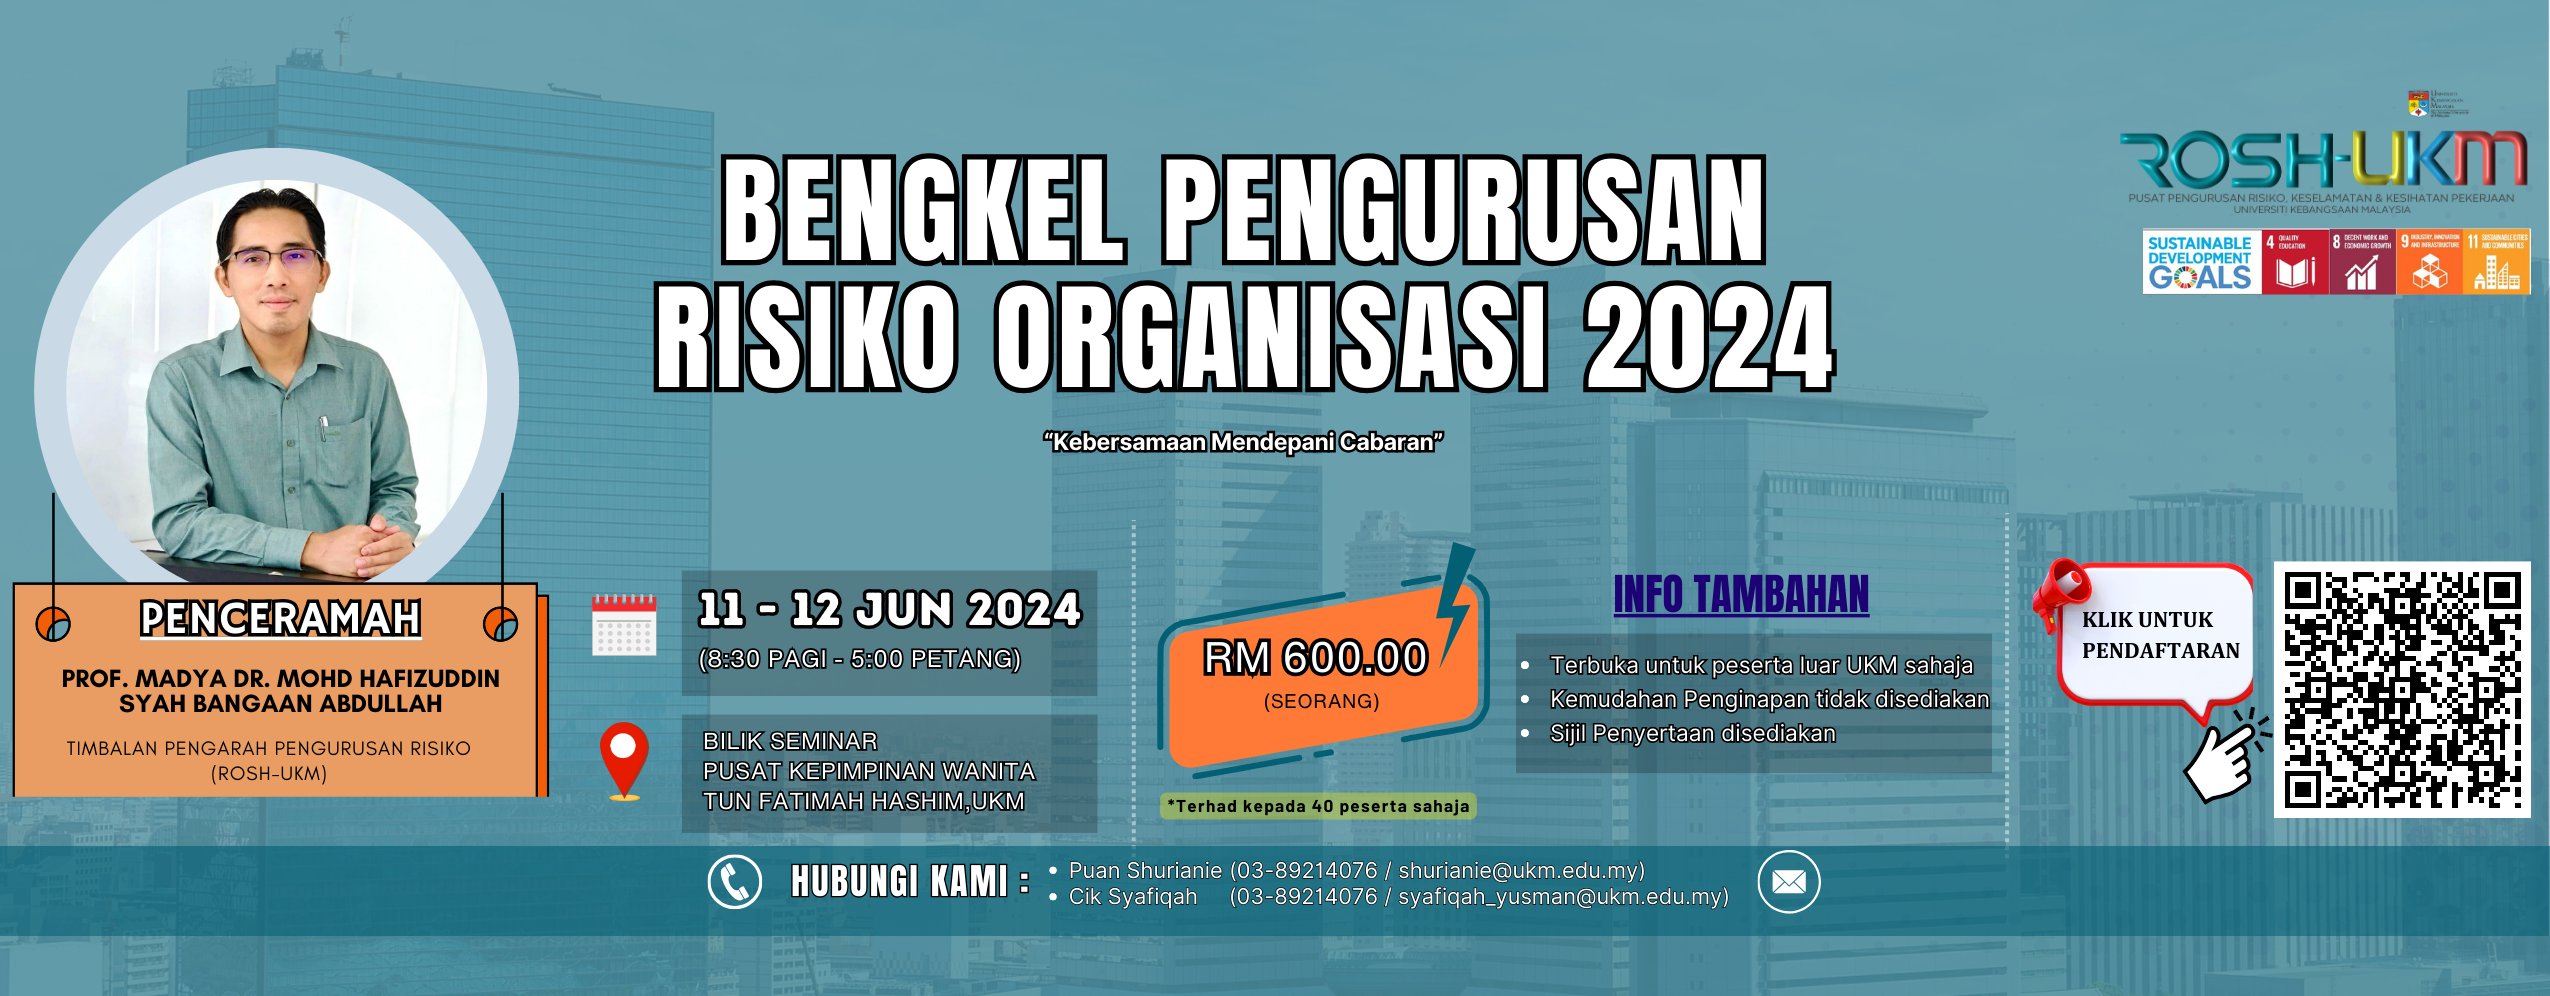 BENGKEL PENGURUSAN RISIKO ORGANISASI 2024 (BPRISK) KALI KE-9